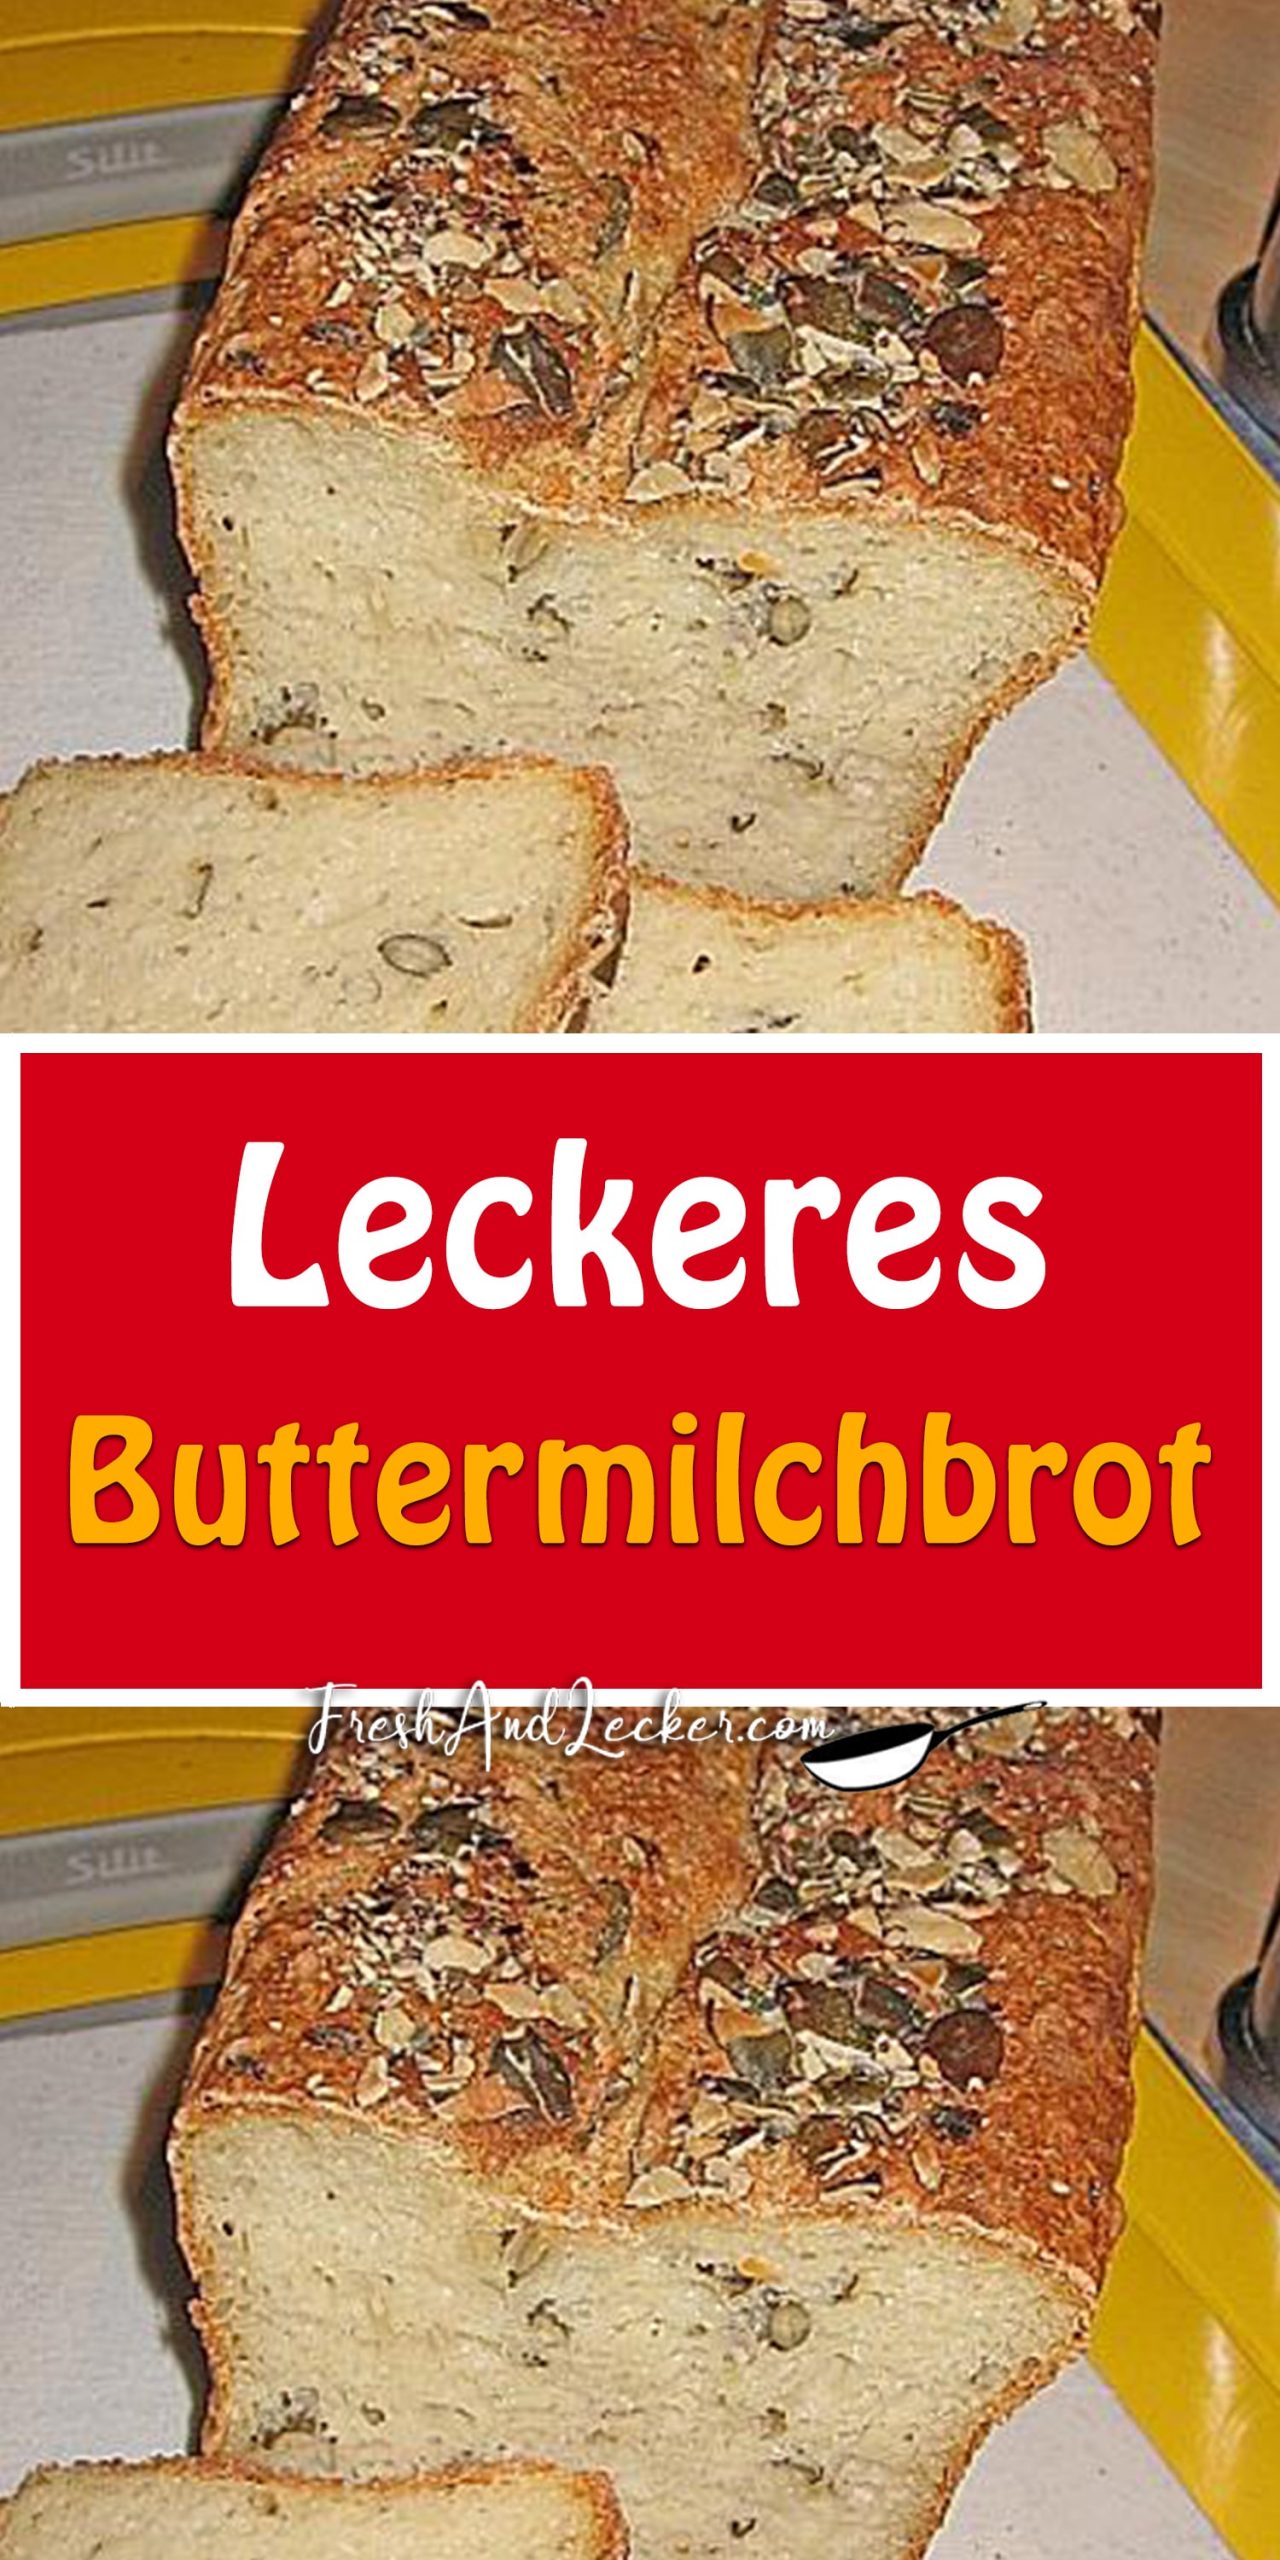 Leckeres Buttermilchbrot - Fresh Lecker